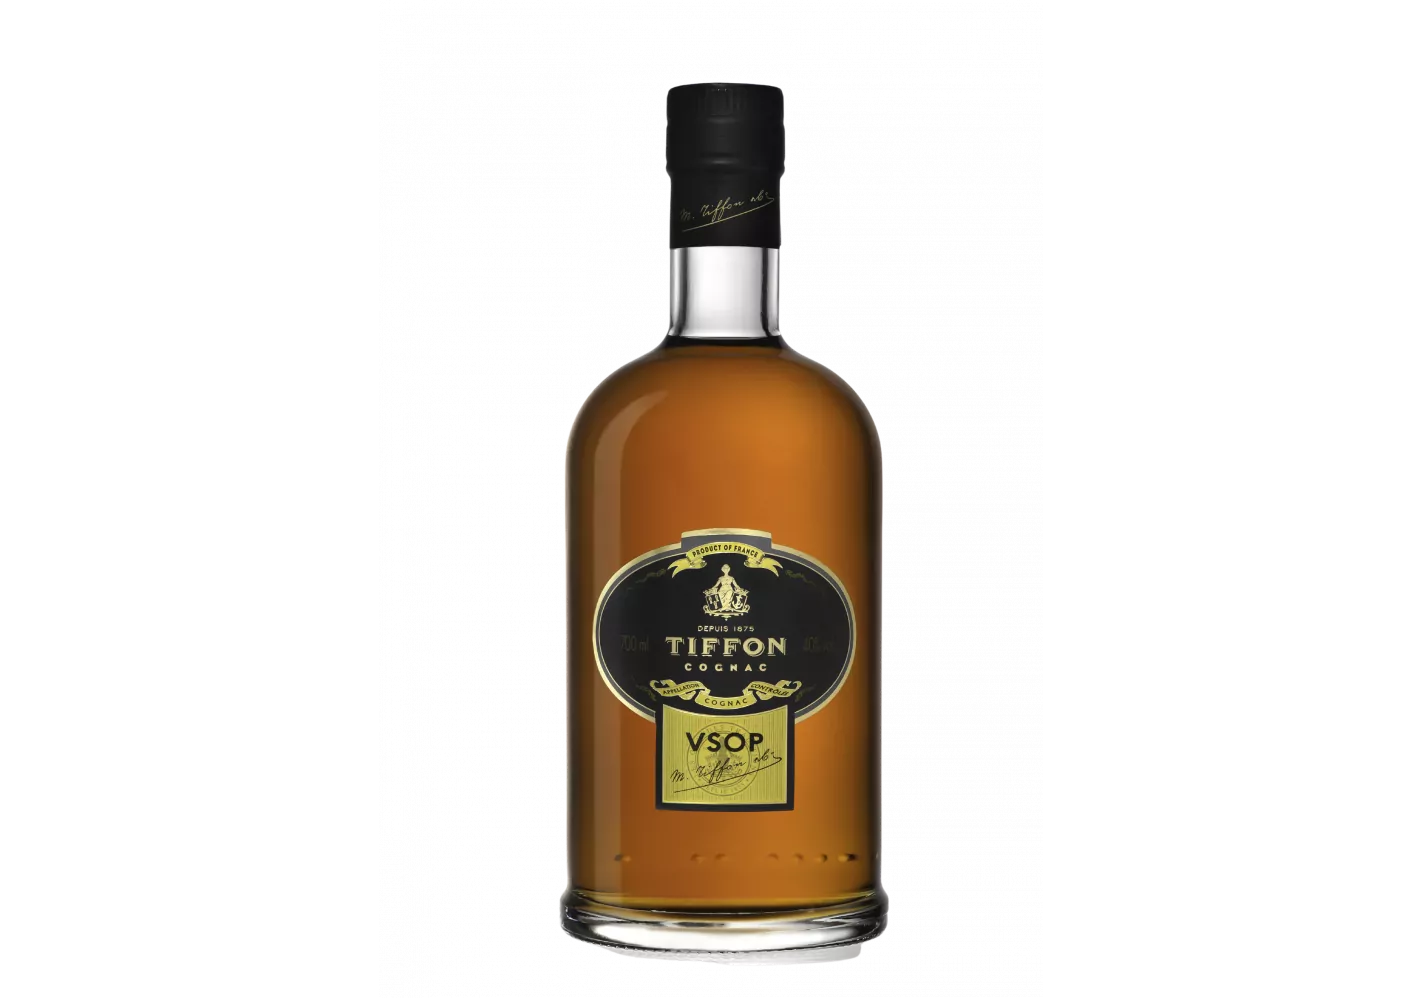 Tiffon VSOP Cognac 70cl - Prices - Cognac-Expert.com